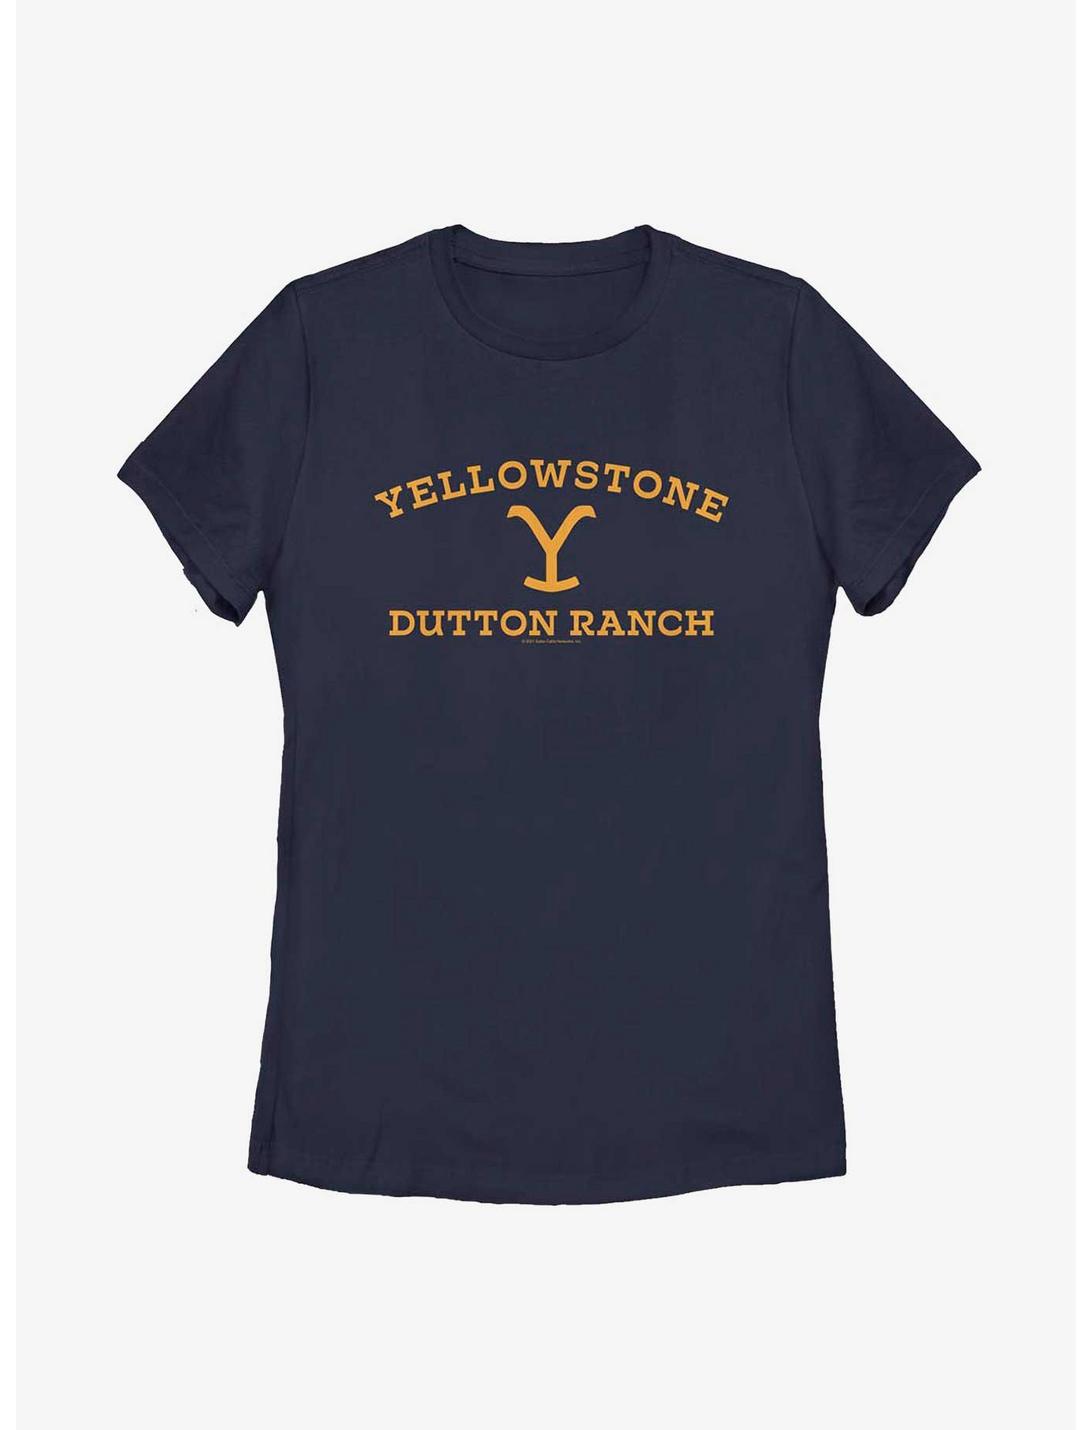 Yellowstone Dutton Ranch Logo Womens T-Shirt, NAVY, hi-res